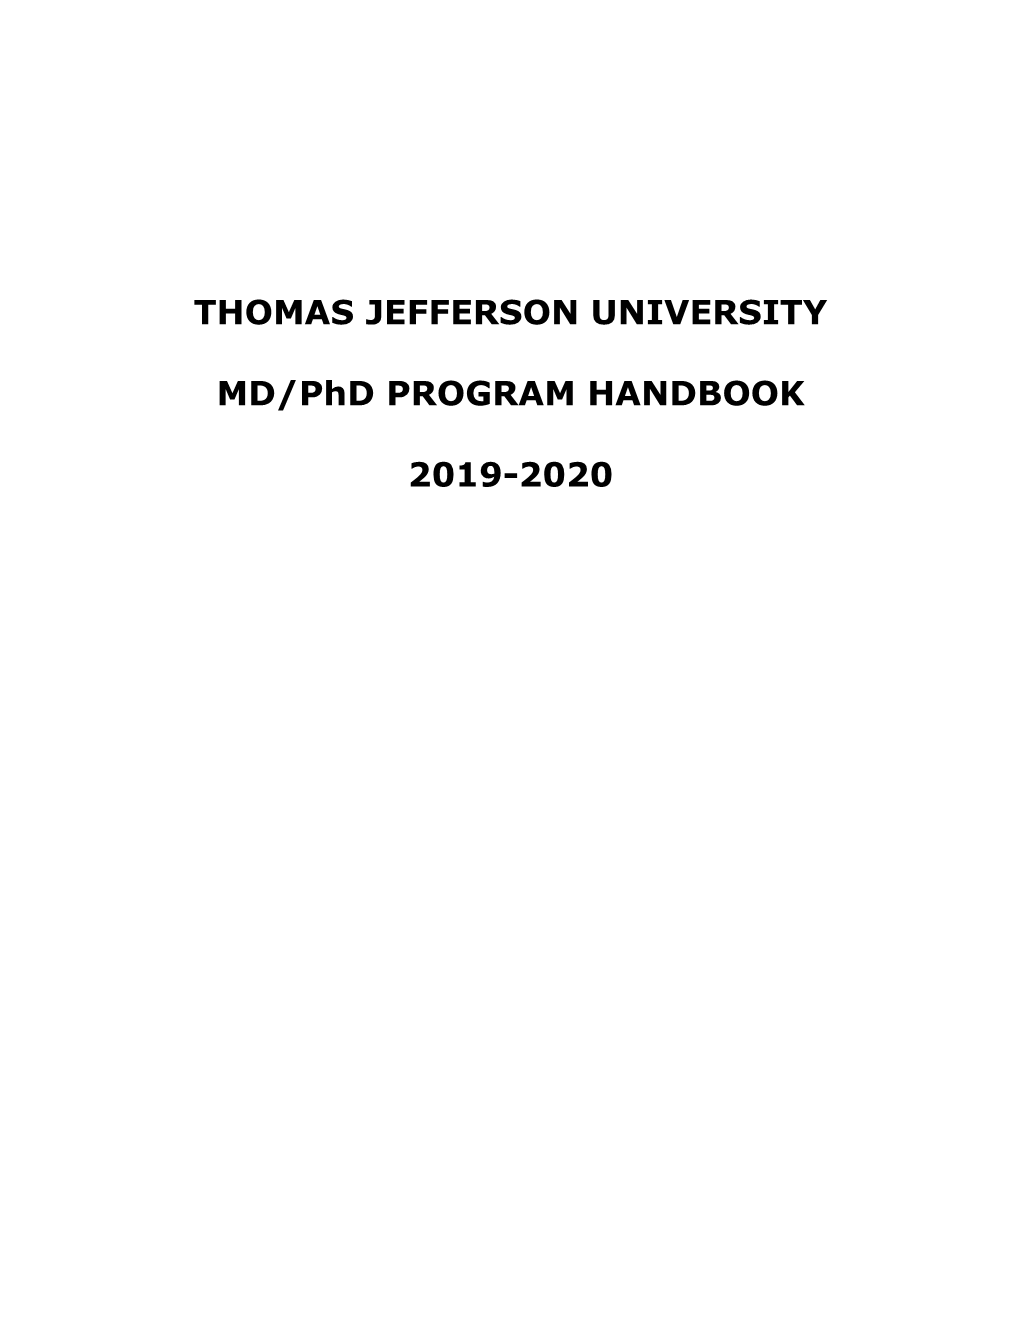 TJU MD/Phd Handbook –2019 - 20